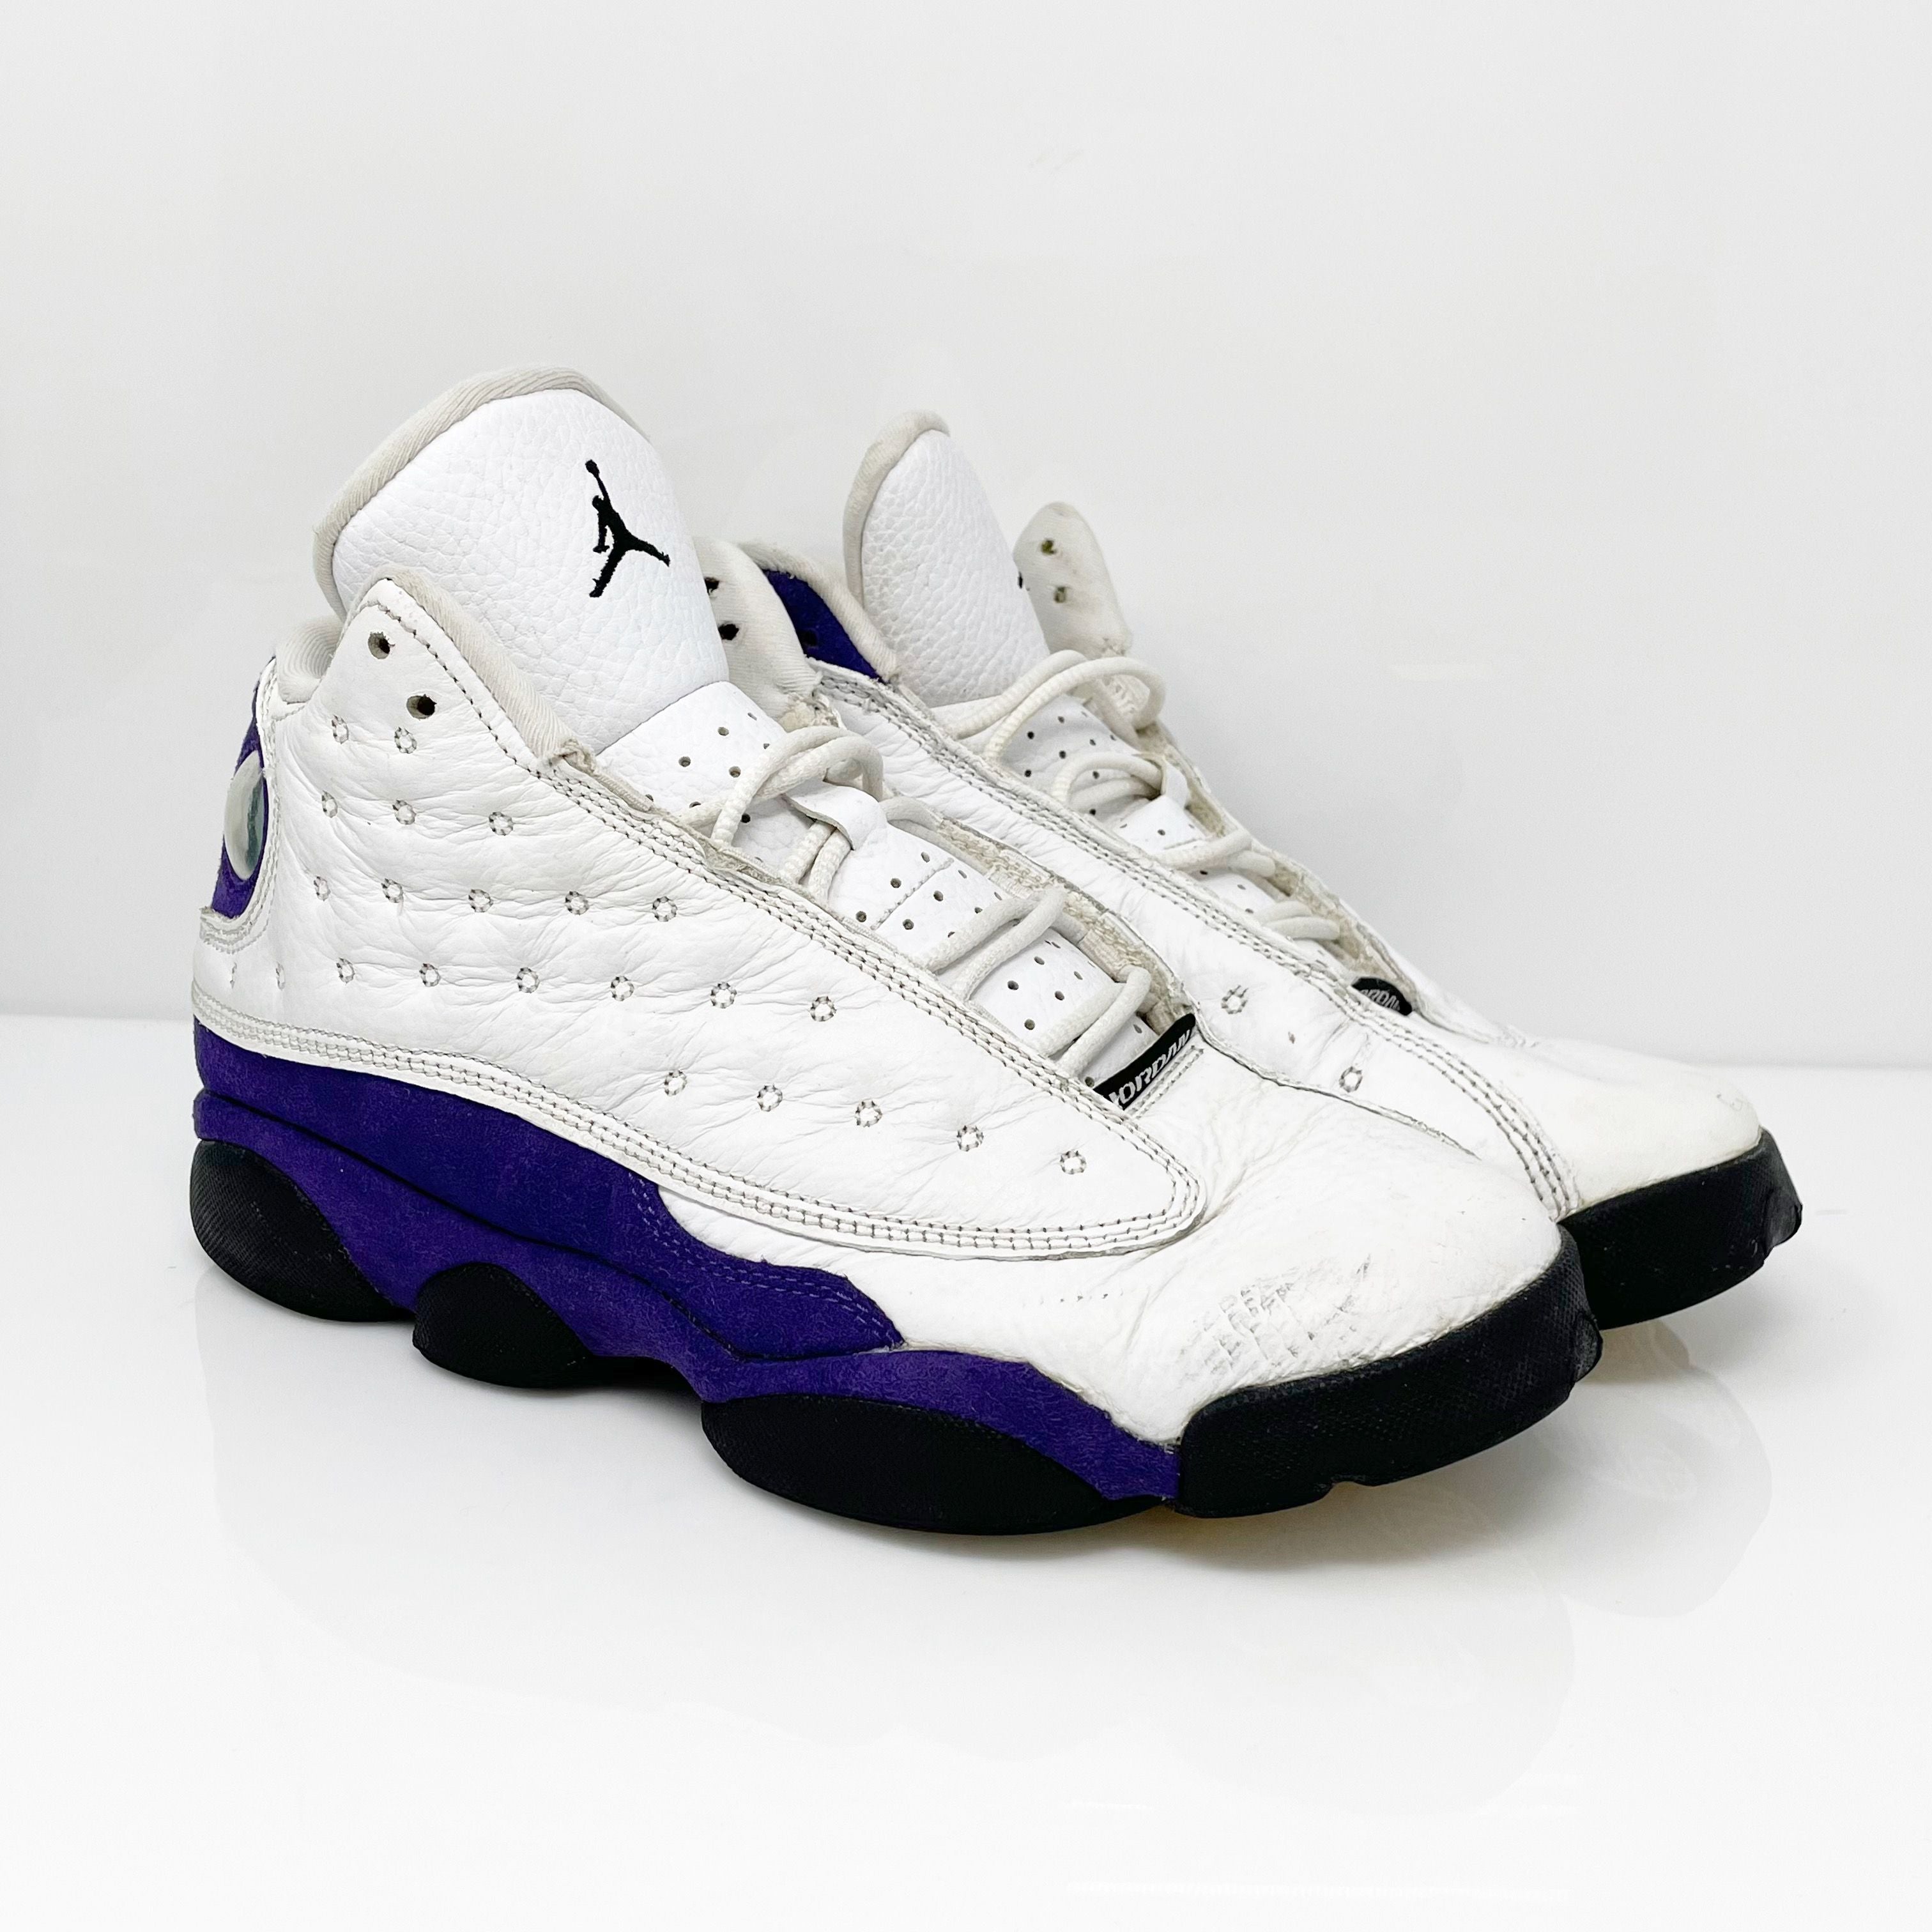 Nike Boys Air Jordan 13 884129-105 White Basketball Shoes Sneakers Siz ...